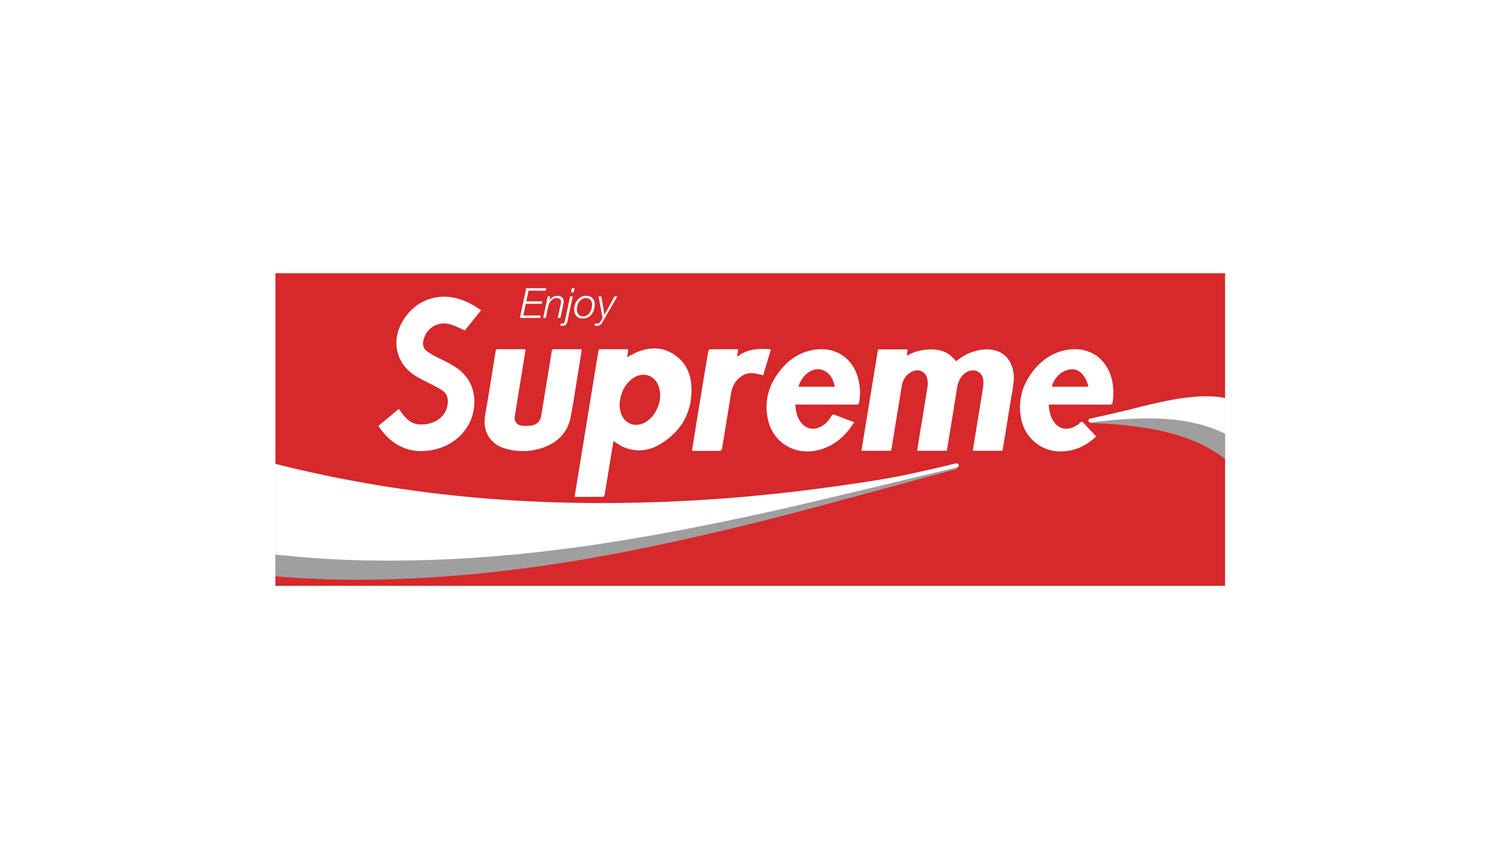 Most expensive supreme box logo. The Supreme Box Logo design has been an… |  by Neu | Medium